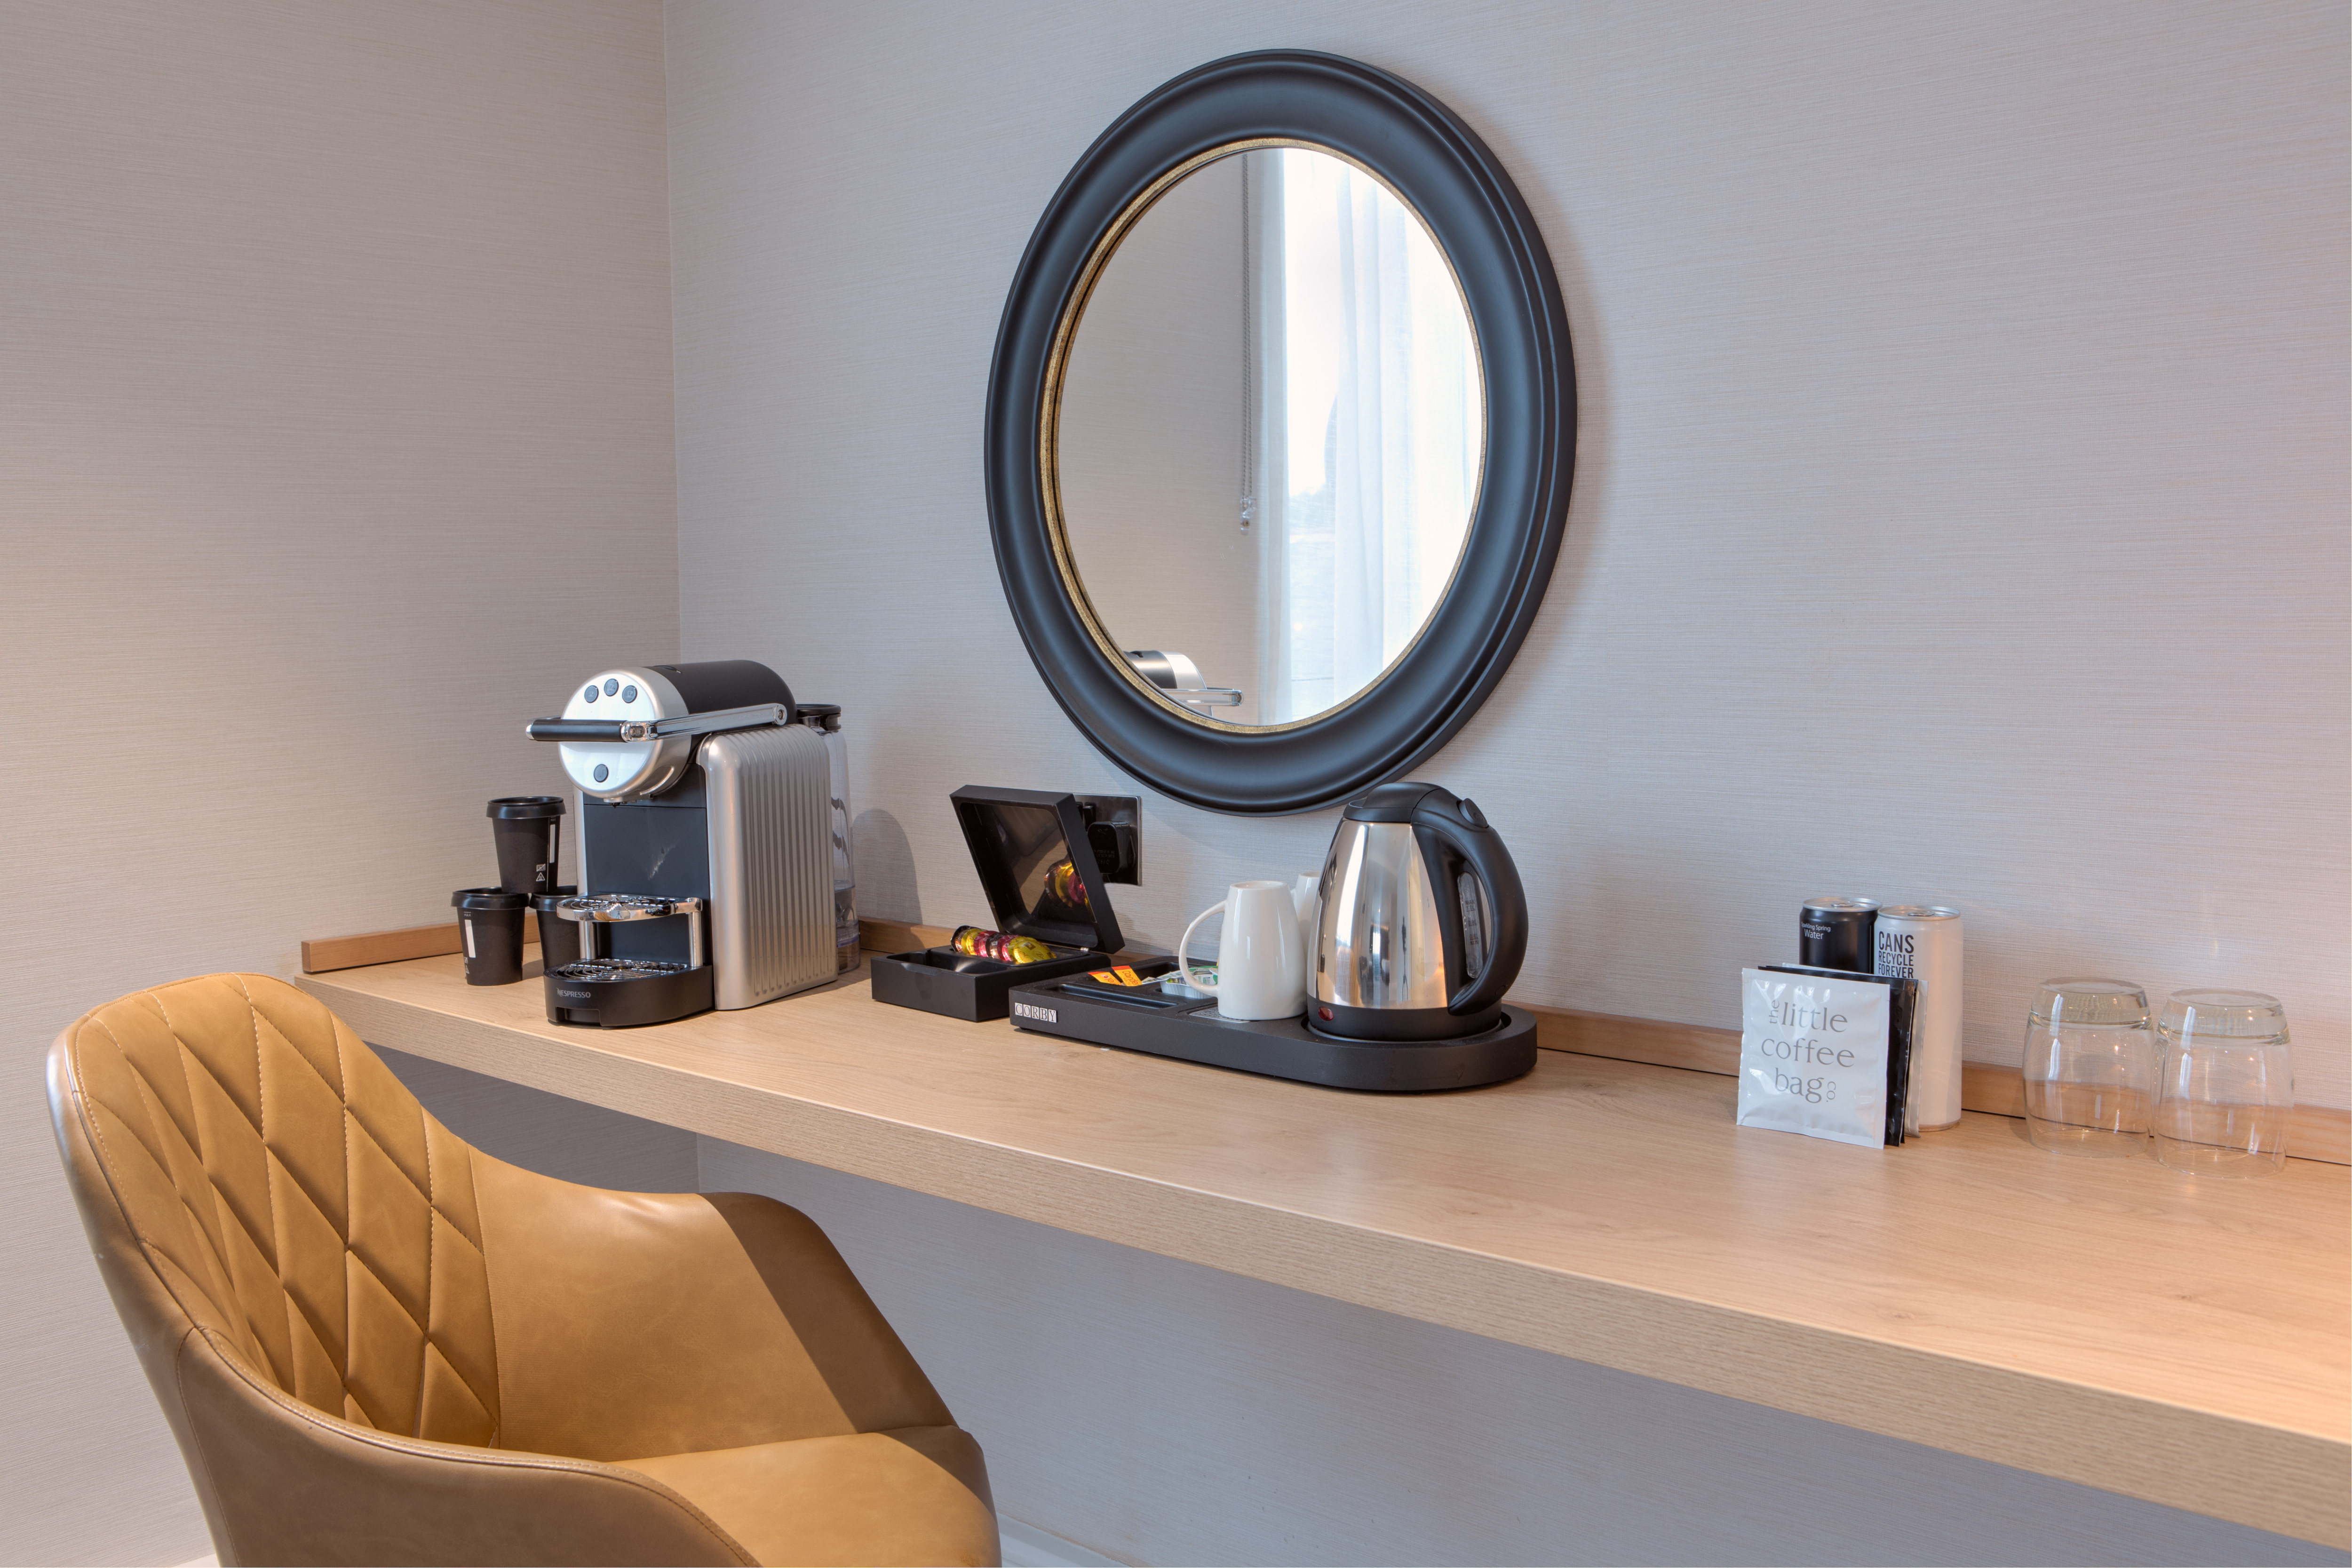 Desk Coffeemaker and Mirror in Guest Room